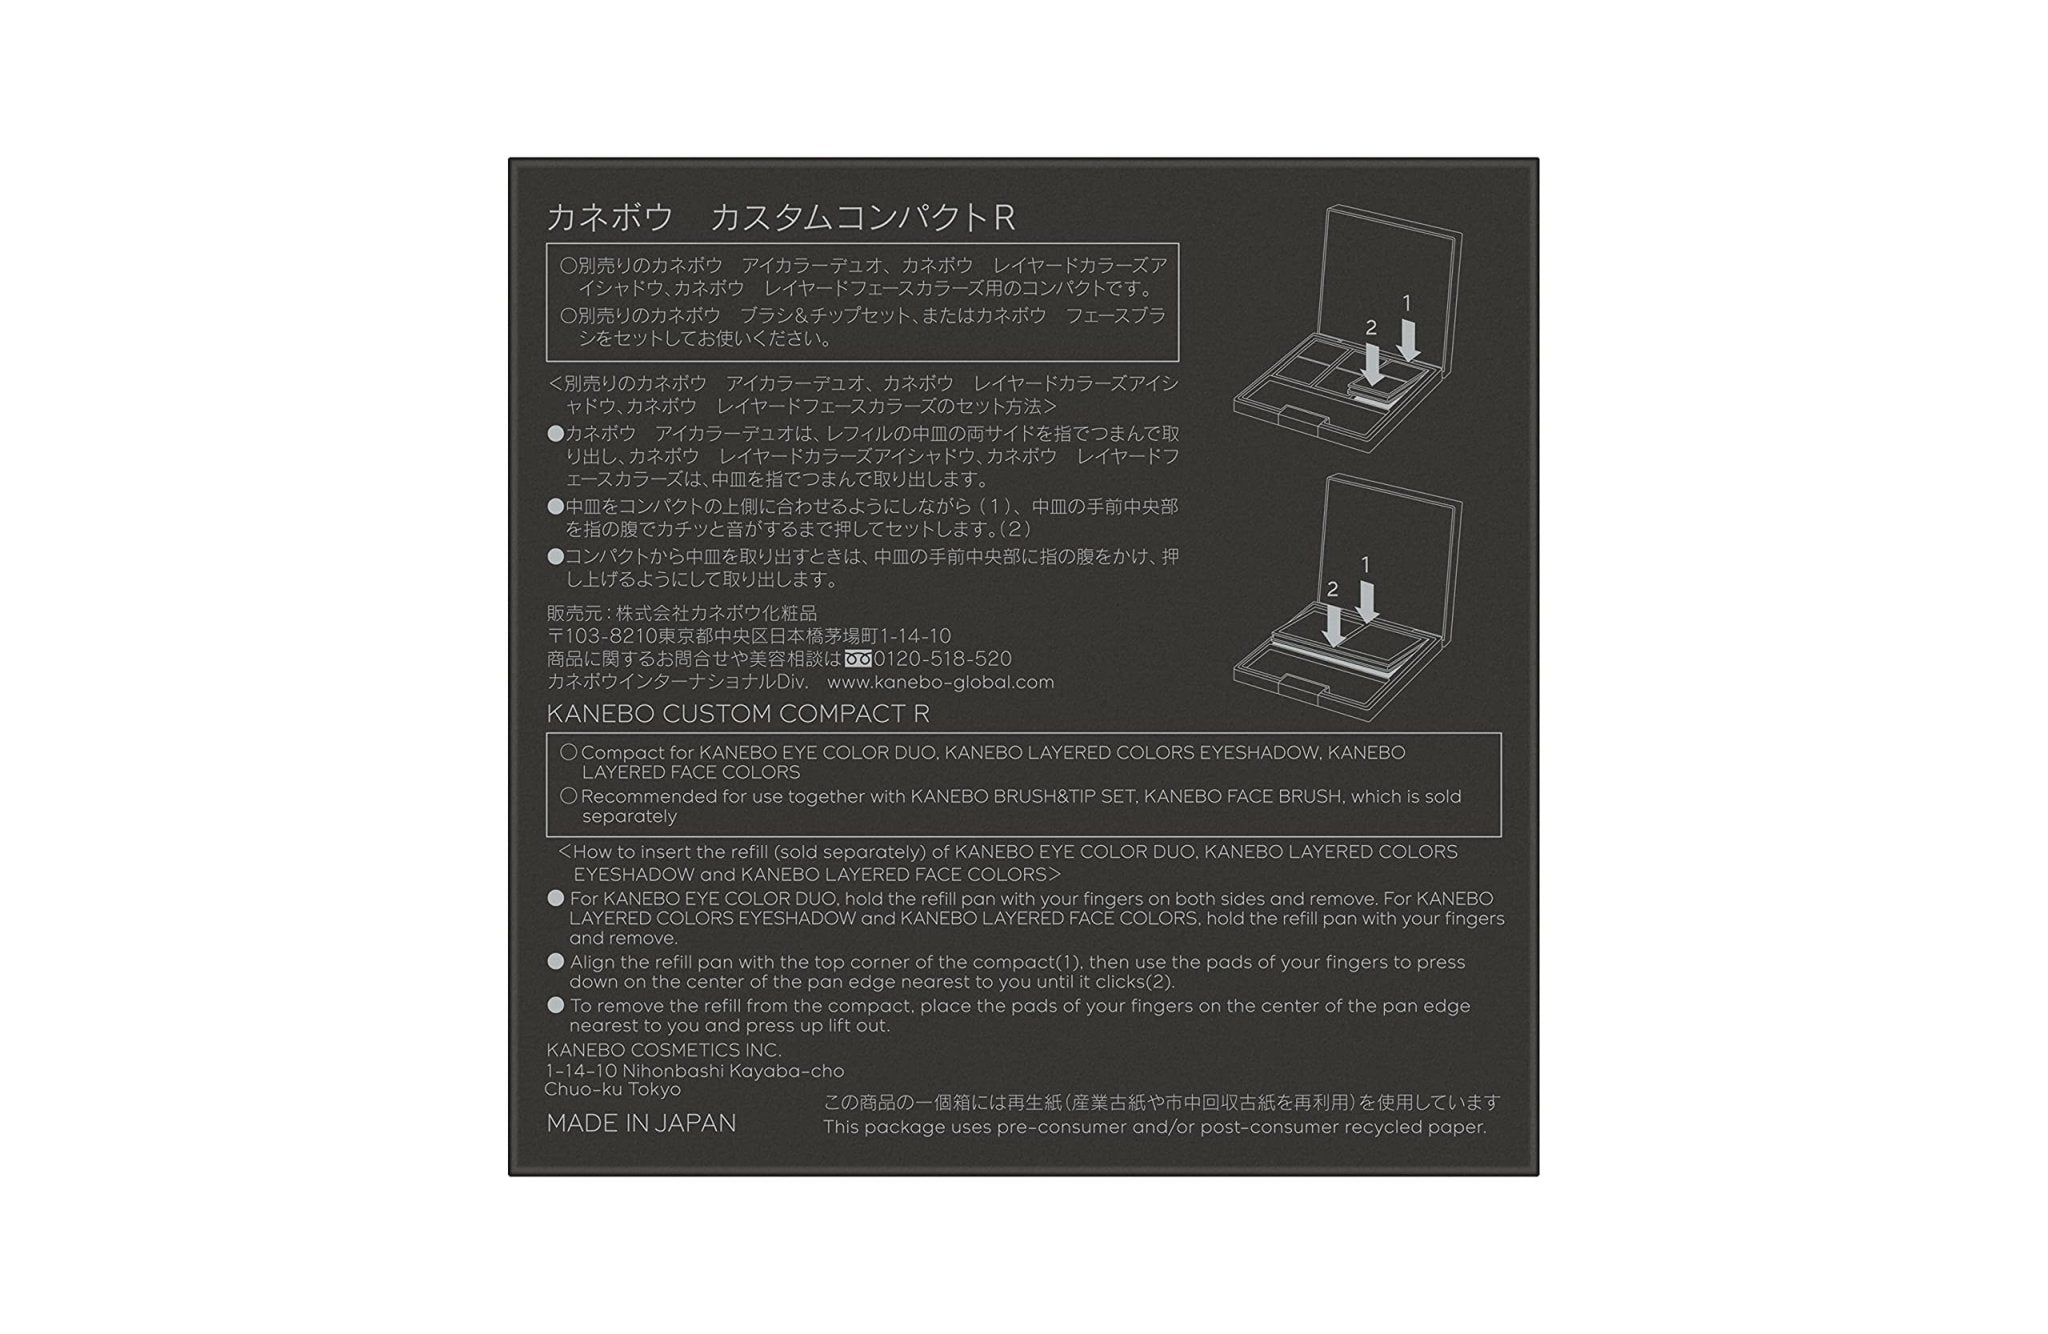 Kanebo Custom Compact R 1 Piece - Premium Compact by Kanebo